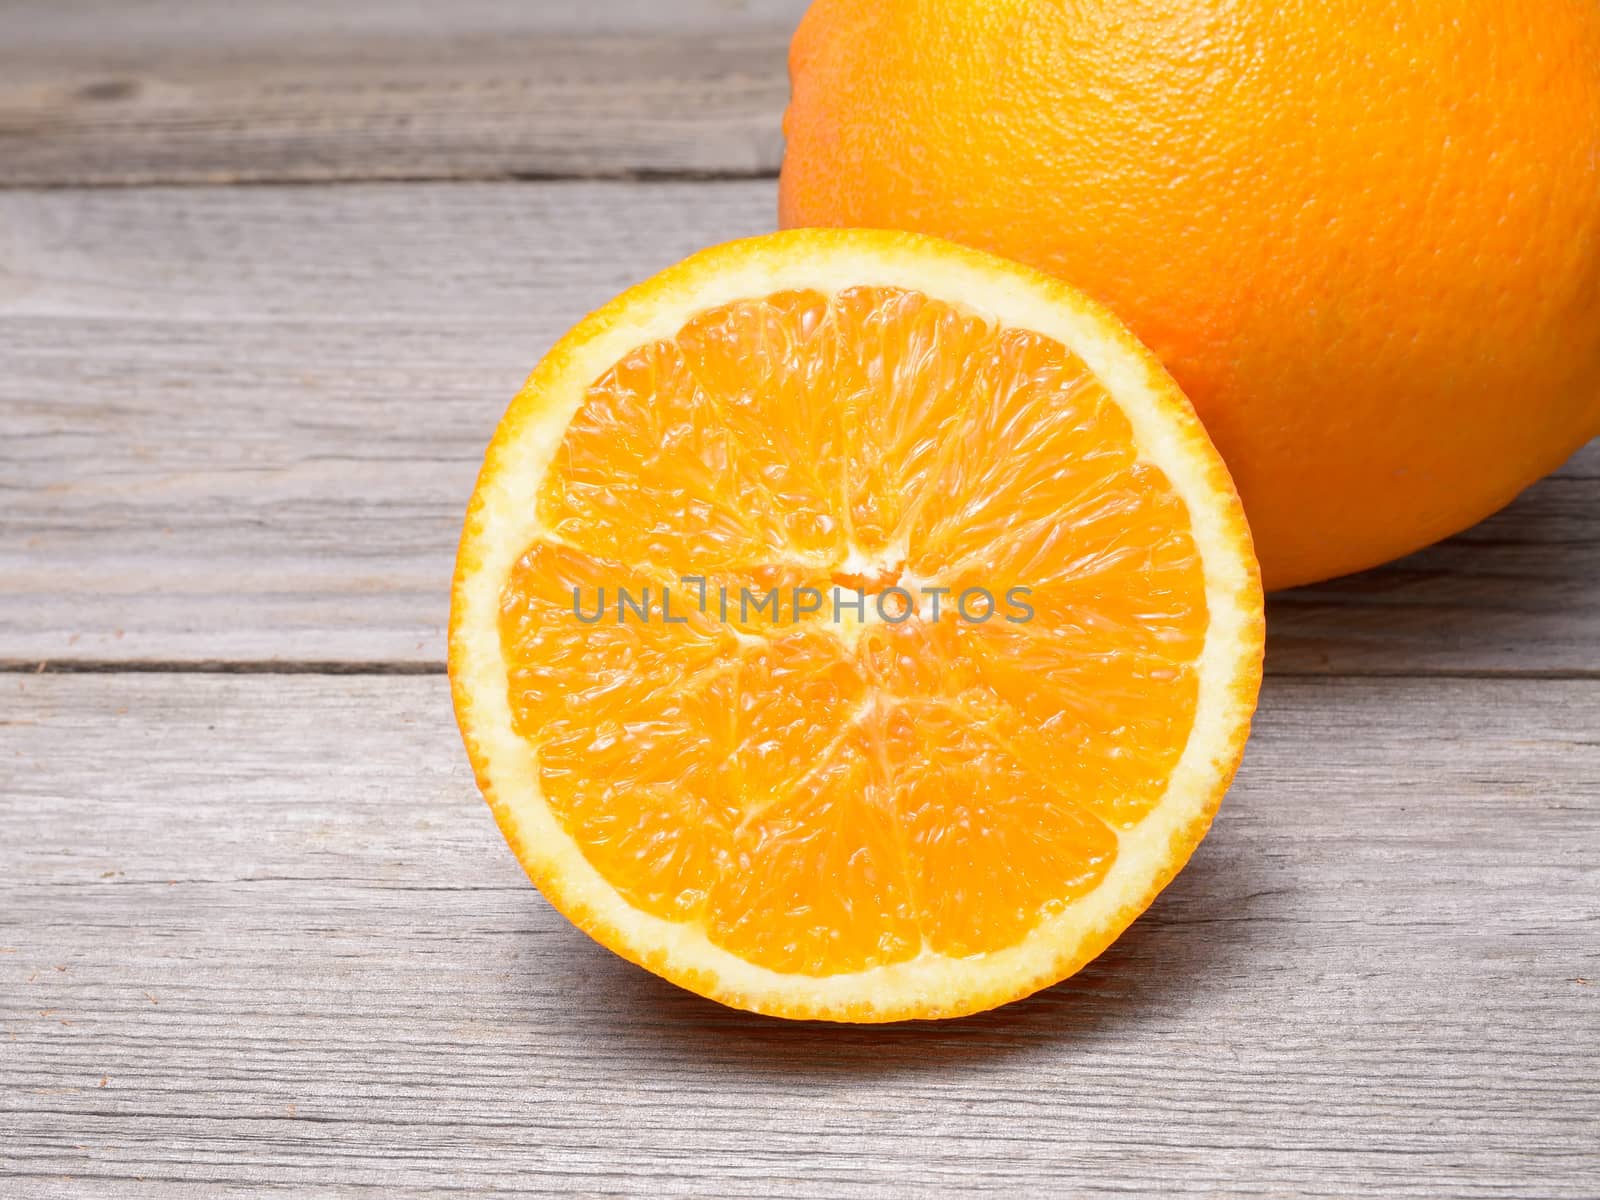 Glass of orange juice with sliced orange half on wooden table by comet